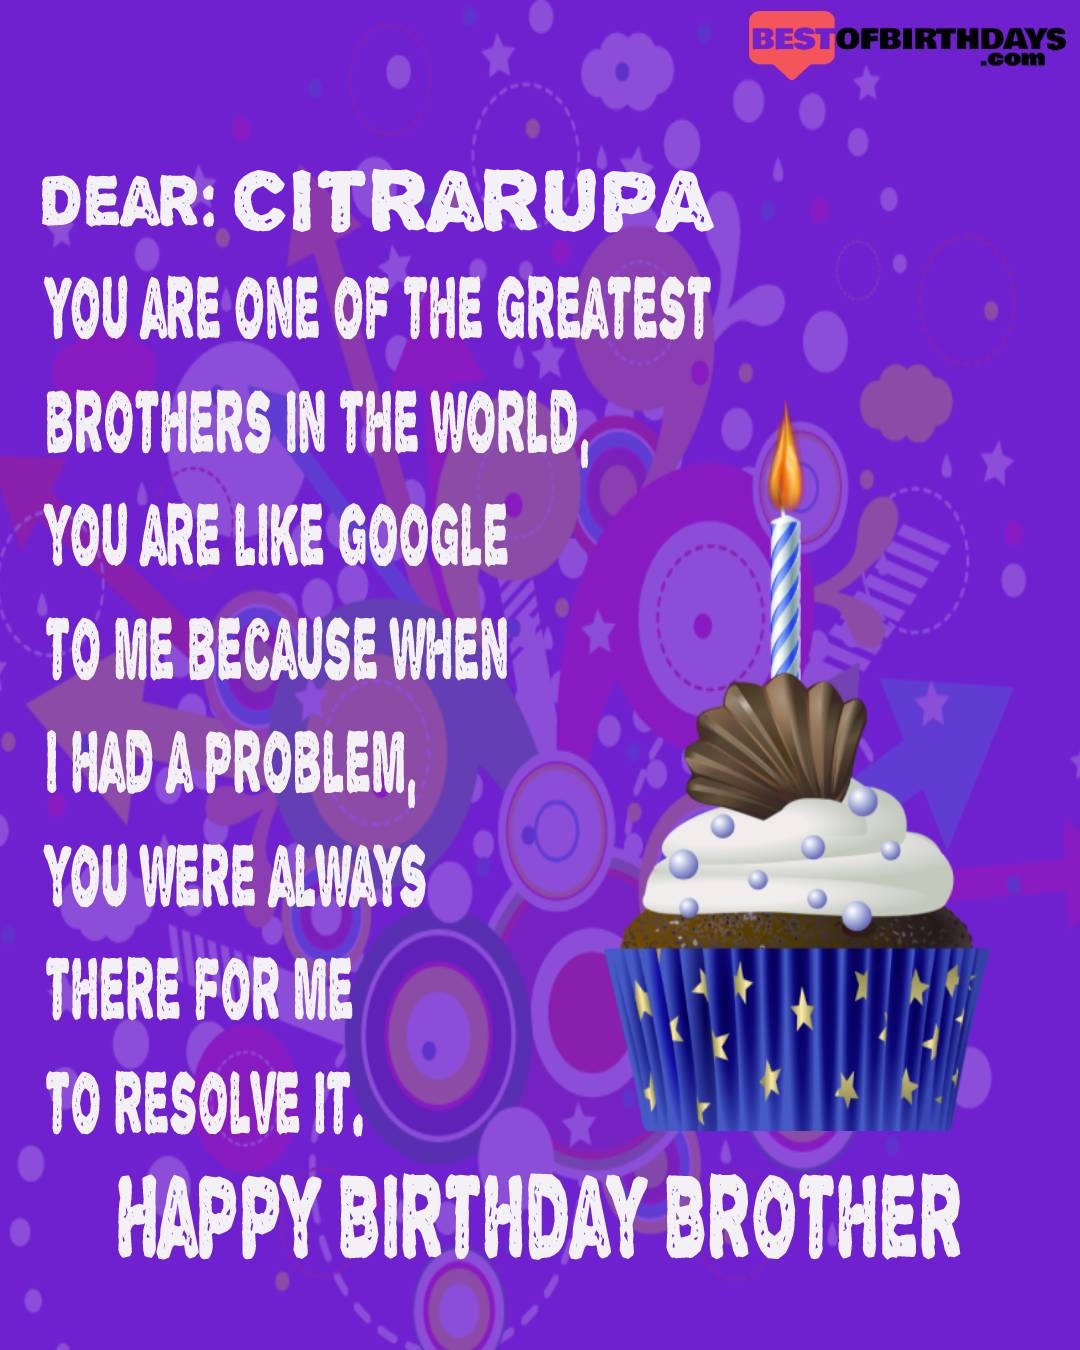 Happy birthday citrarupa bhai brother bro